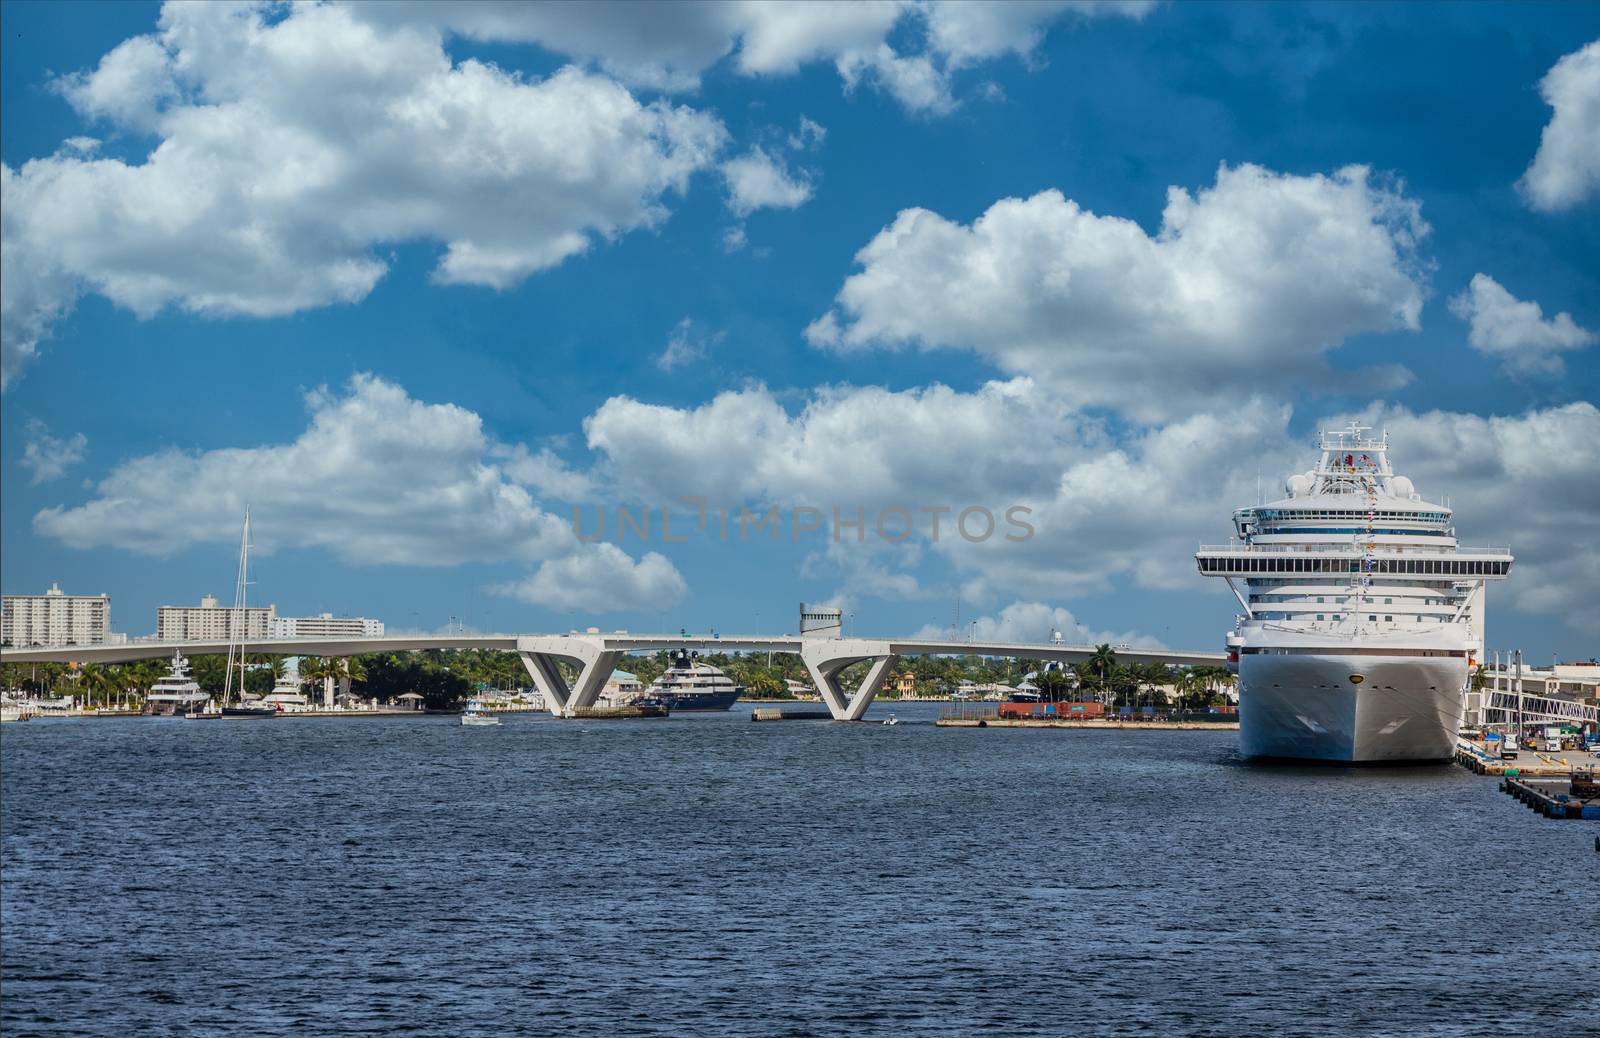 Cruise Ship by Fort Lauderdale DrawBridge by dbvirago